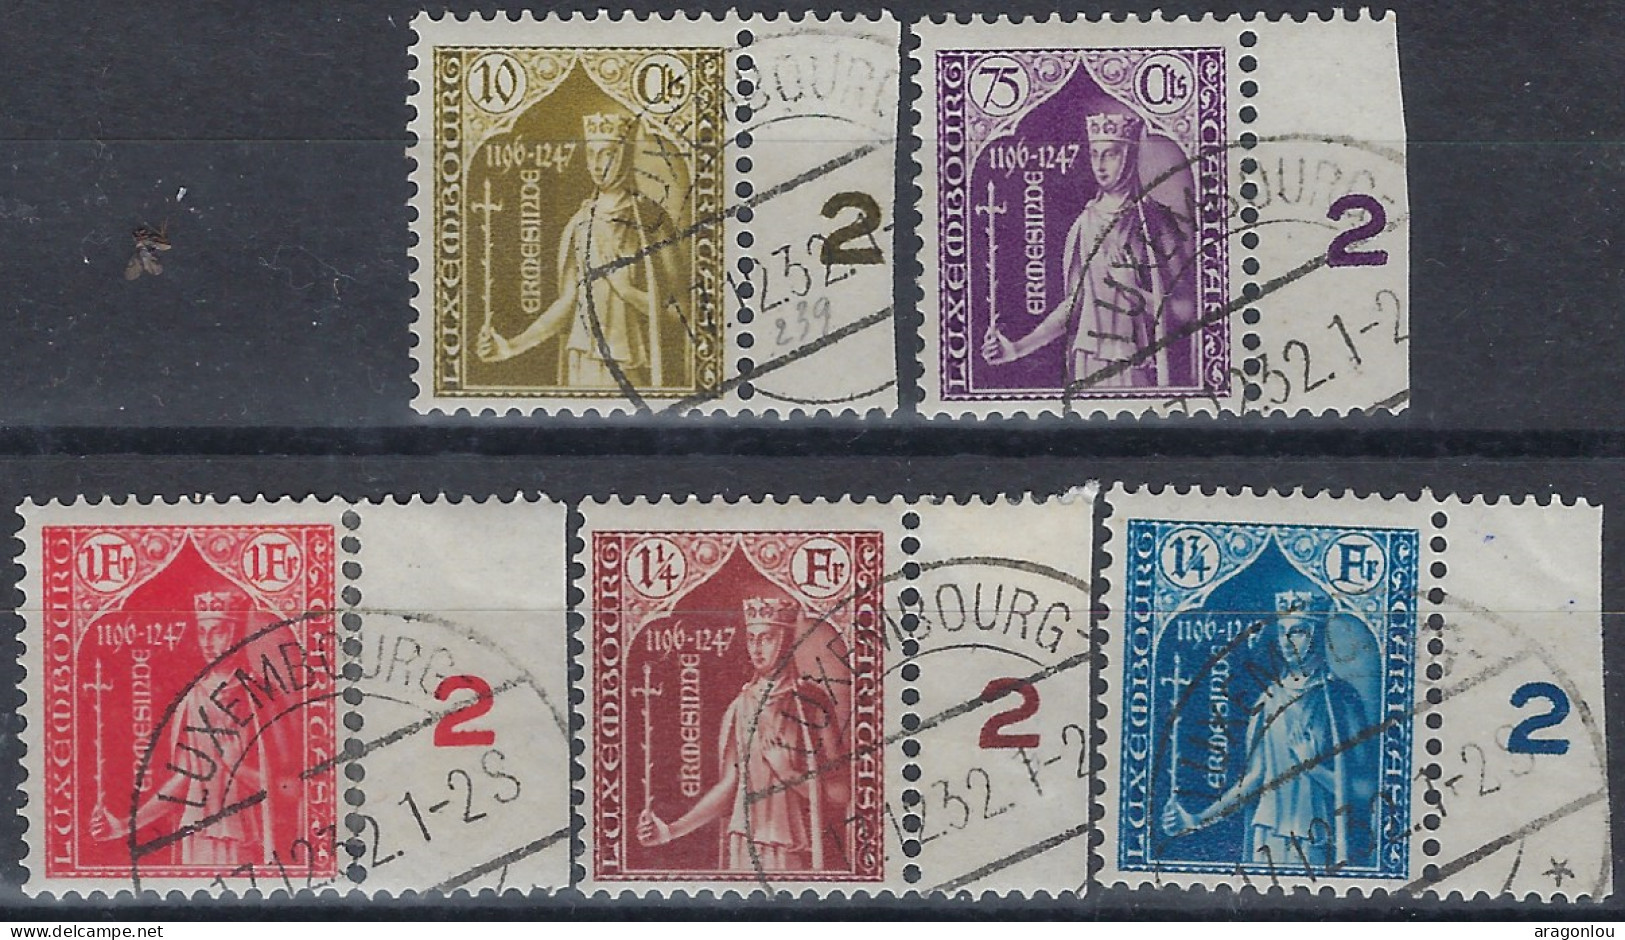 Luxembourg - Luxemburg - Timbres  1932  Série    Comtesse   Ermesinde    Caritas °   VC.140,- - Usati